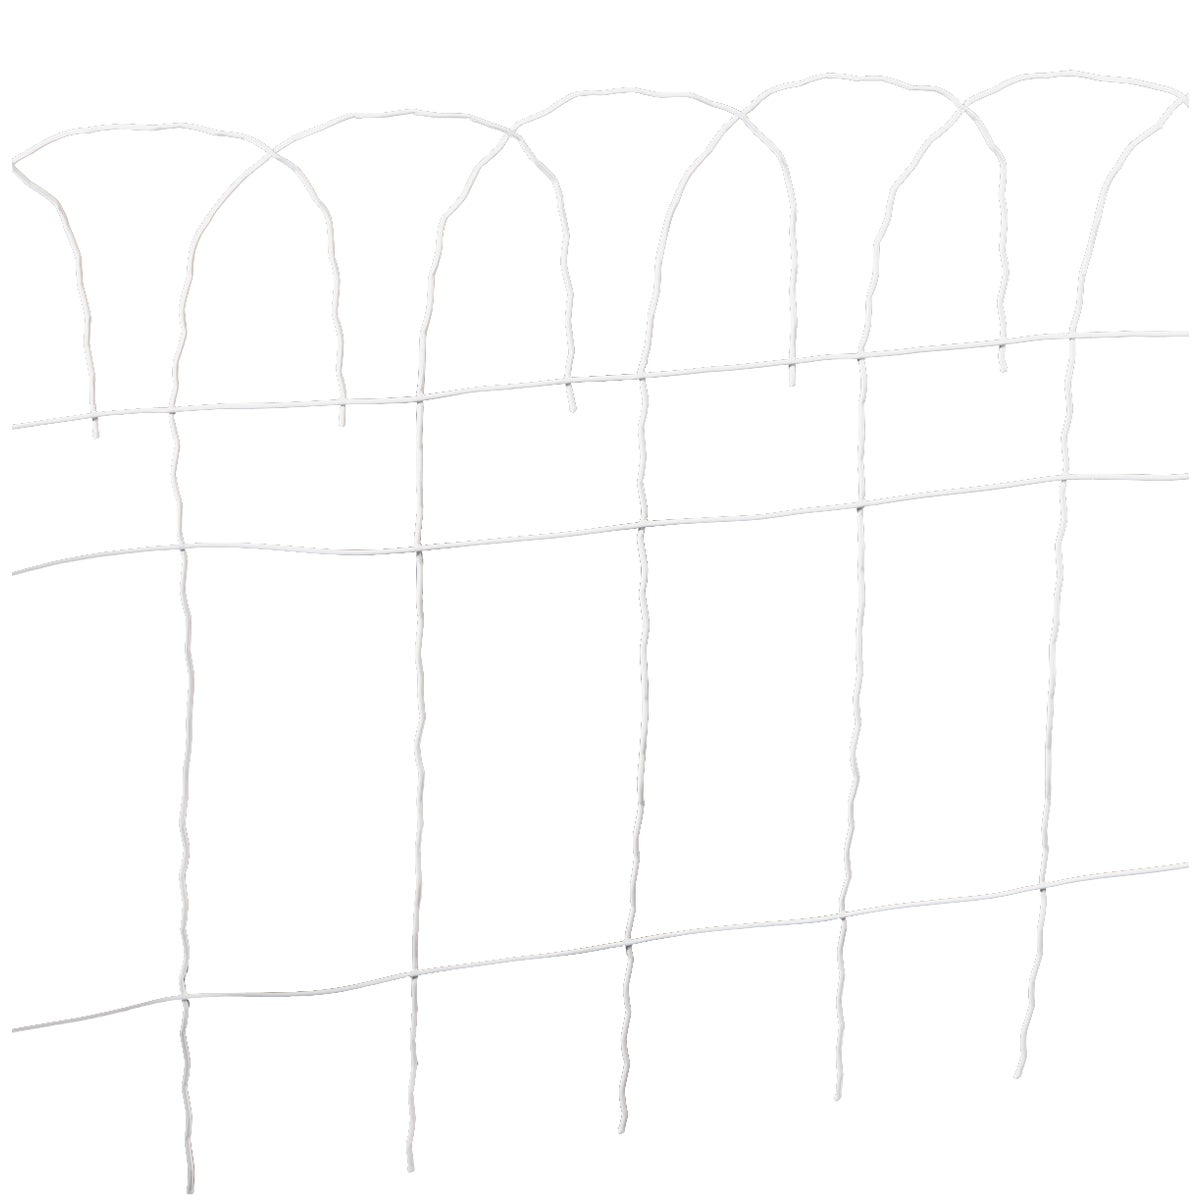 Item 732942, Vinyl-coated, scroll top decorative border fence.